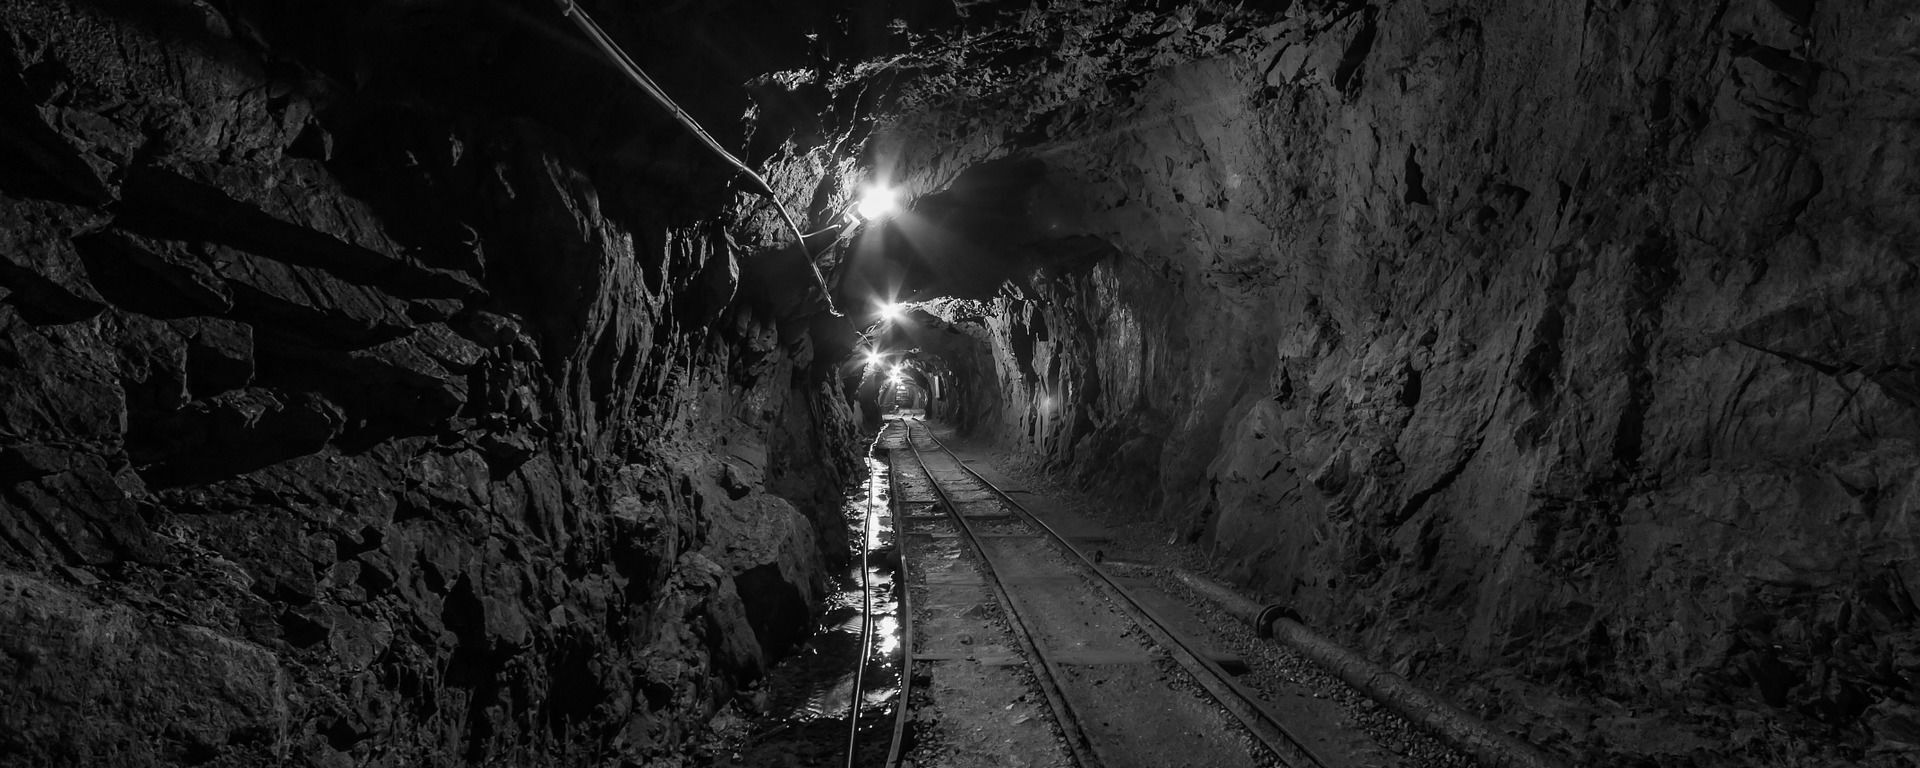 Un túnel en una mina - Sputnik Mundo, 1920, 27.03.2021